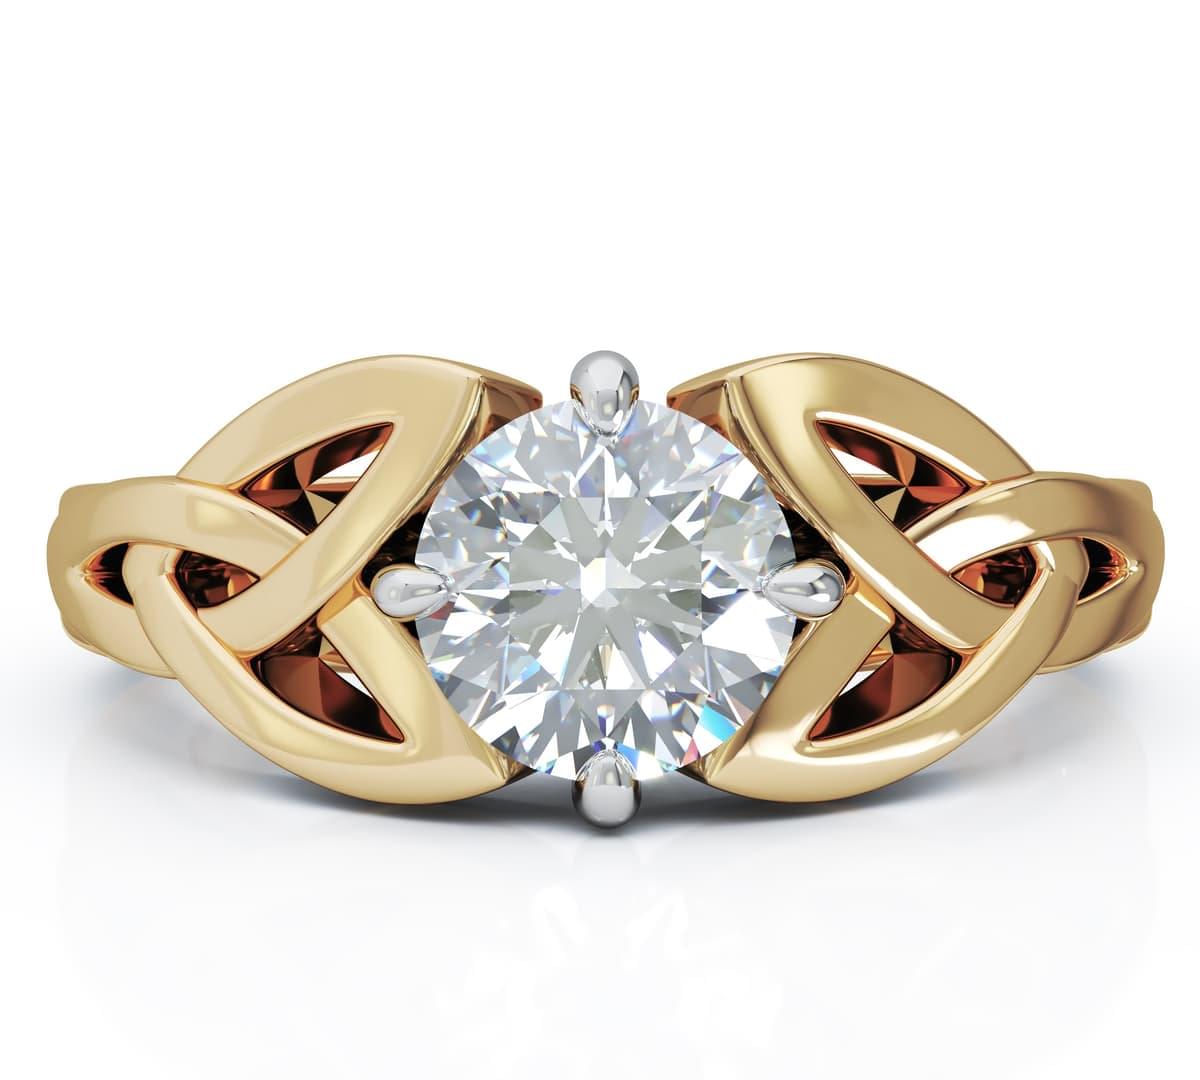 Buy Celtic Engagement Ring, 18K White Gold and Diamond Engagement Ring,  Unique Diamond Ring, Unique Engagement Ring, Knot Ring Online in India -  Etsy